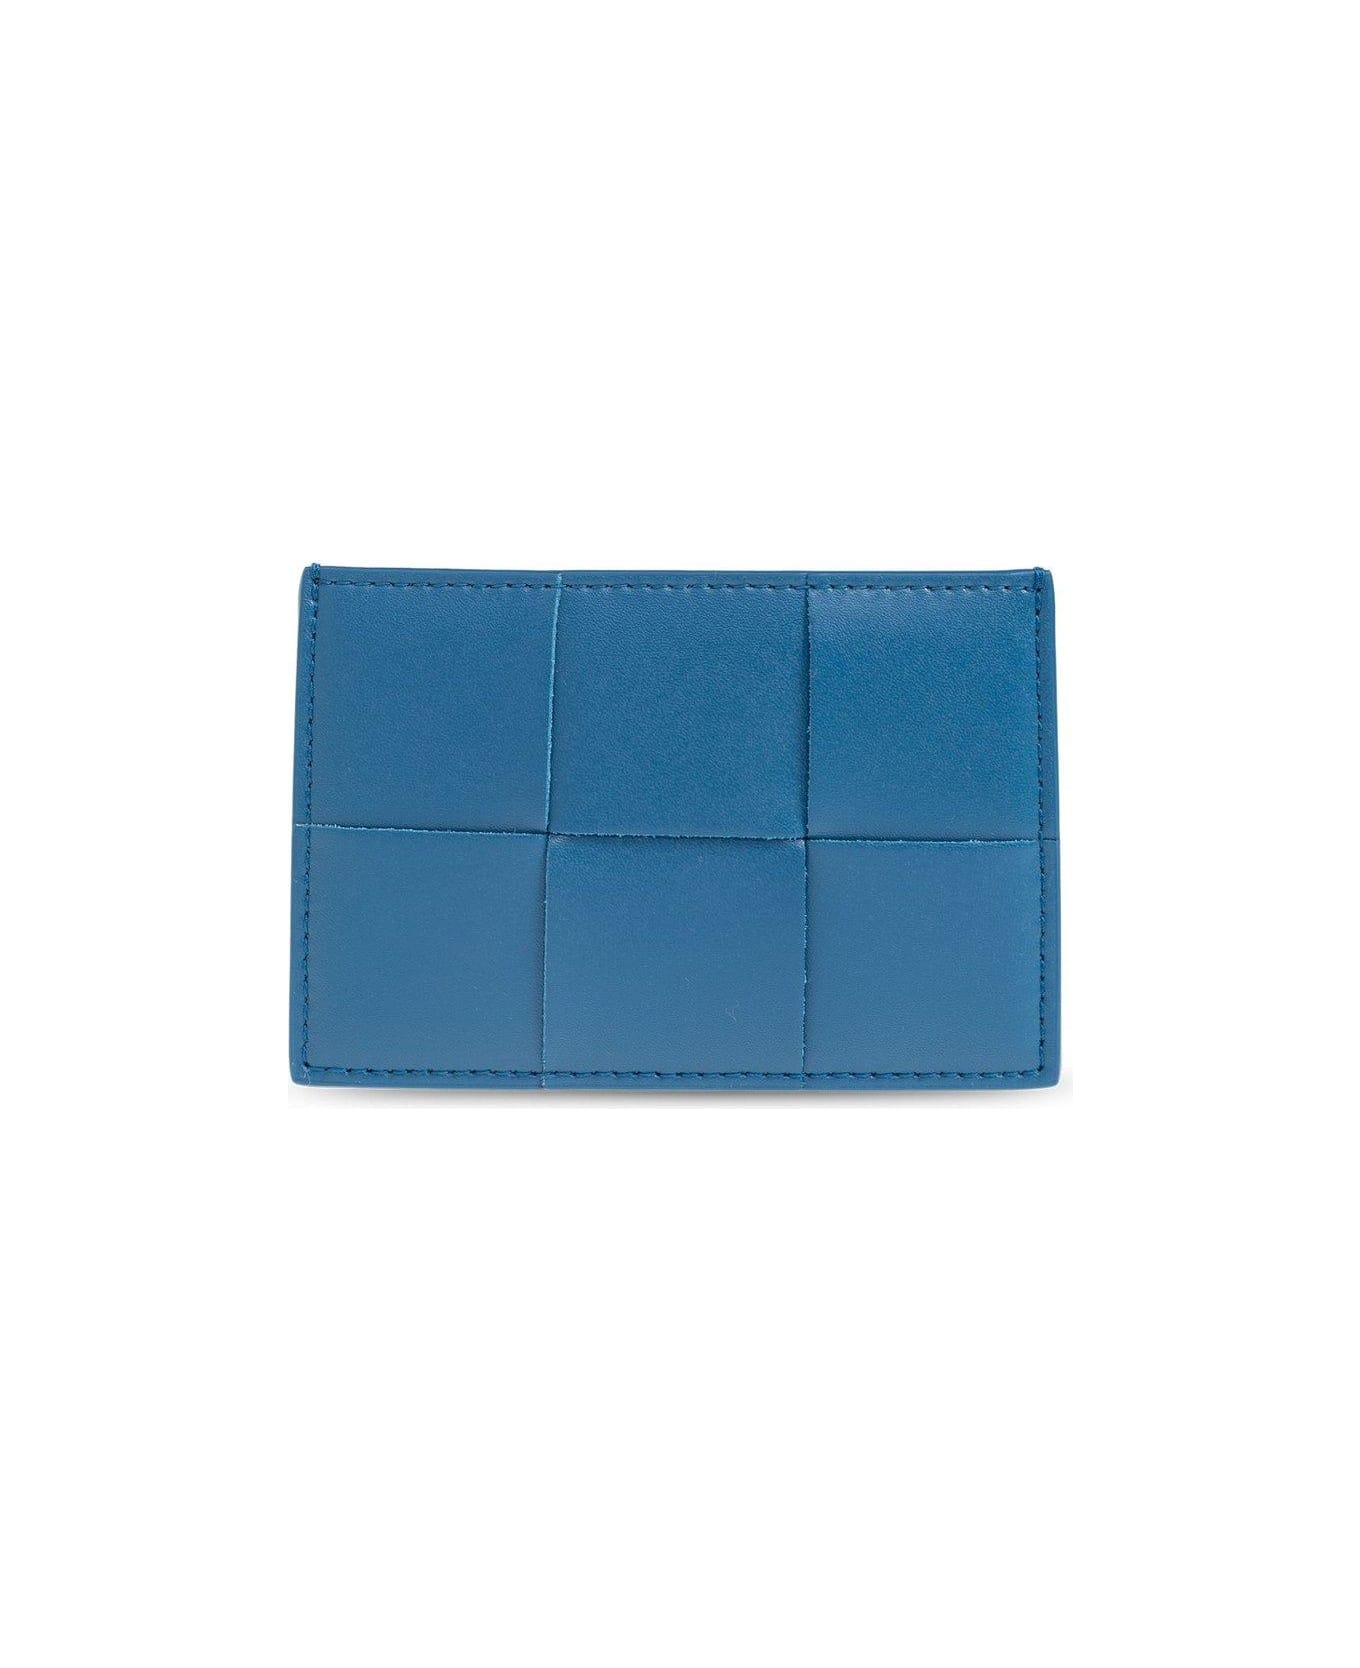 Bottega Veneta Signature Weave Card Holder - LIGHT BLUE 財布